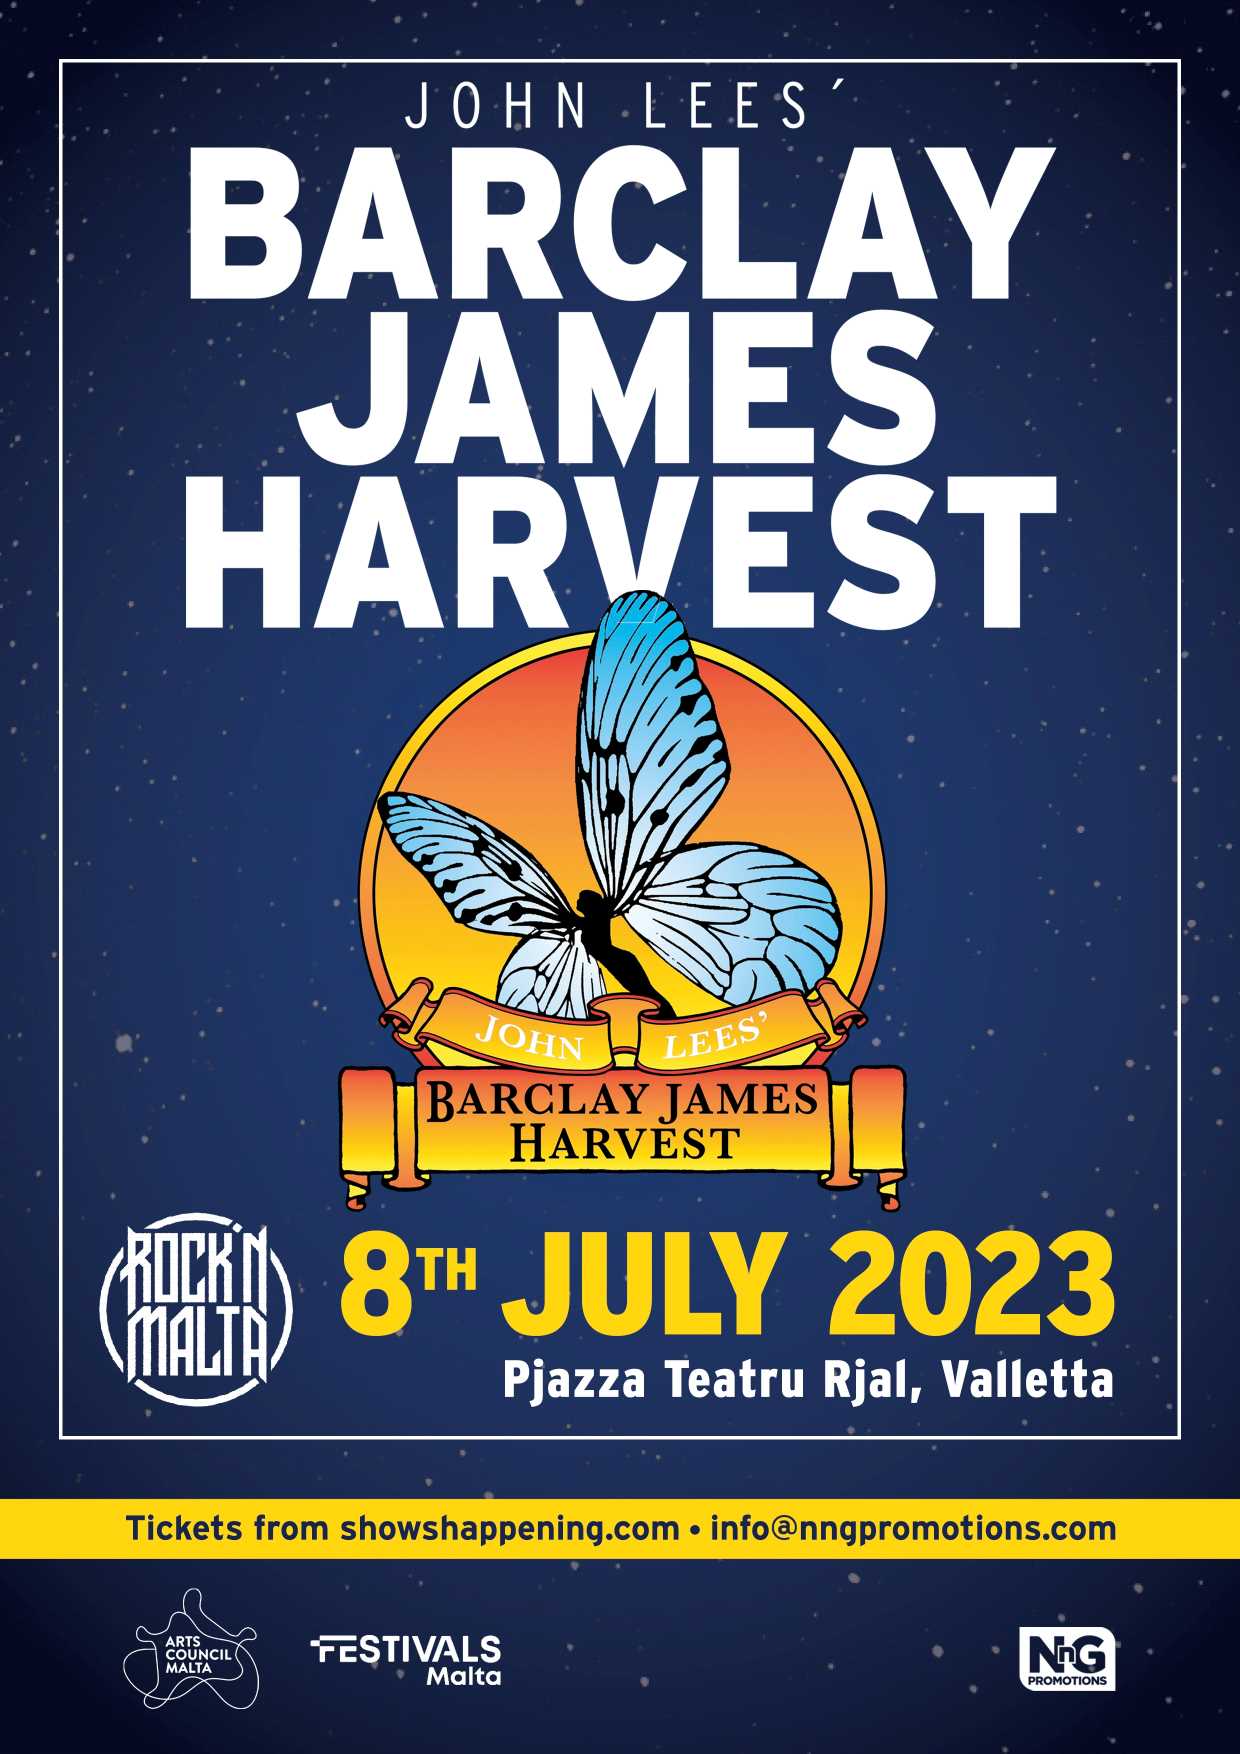 John Lee's Barclay James Harvest poster